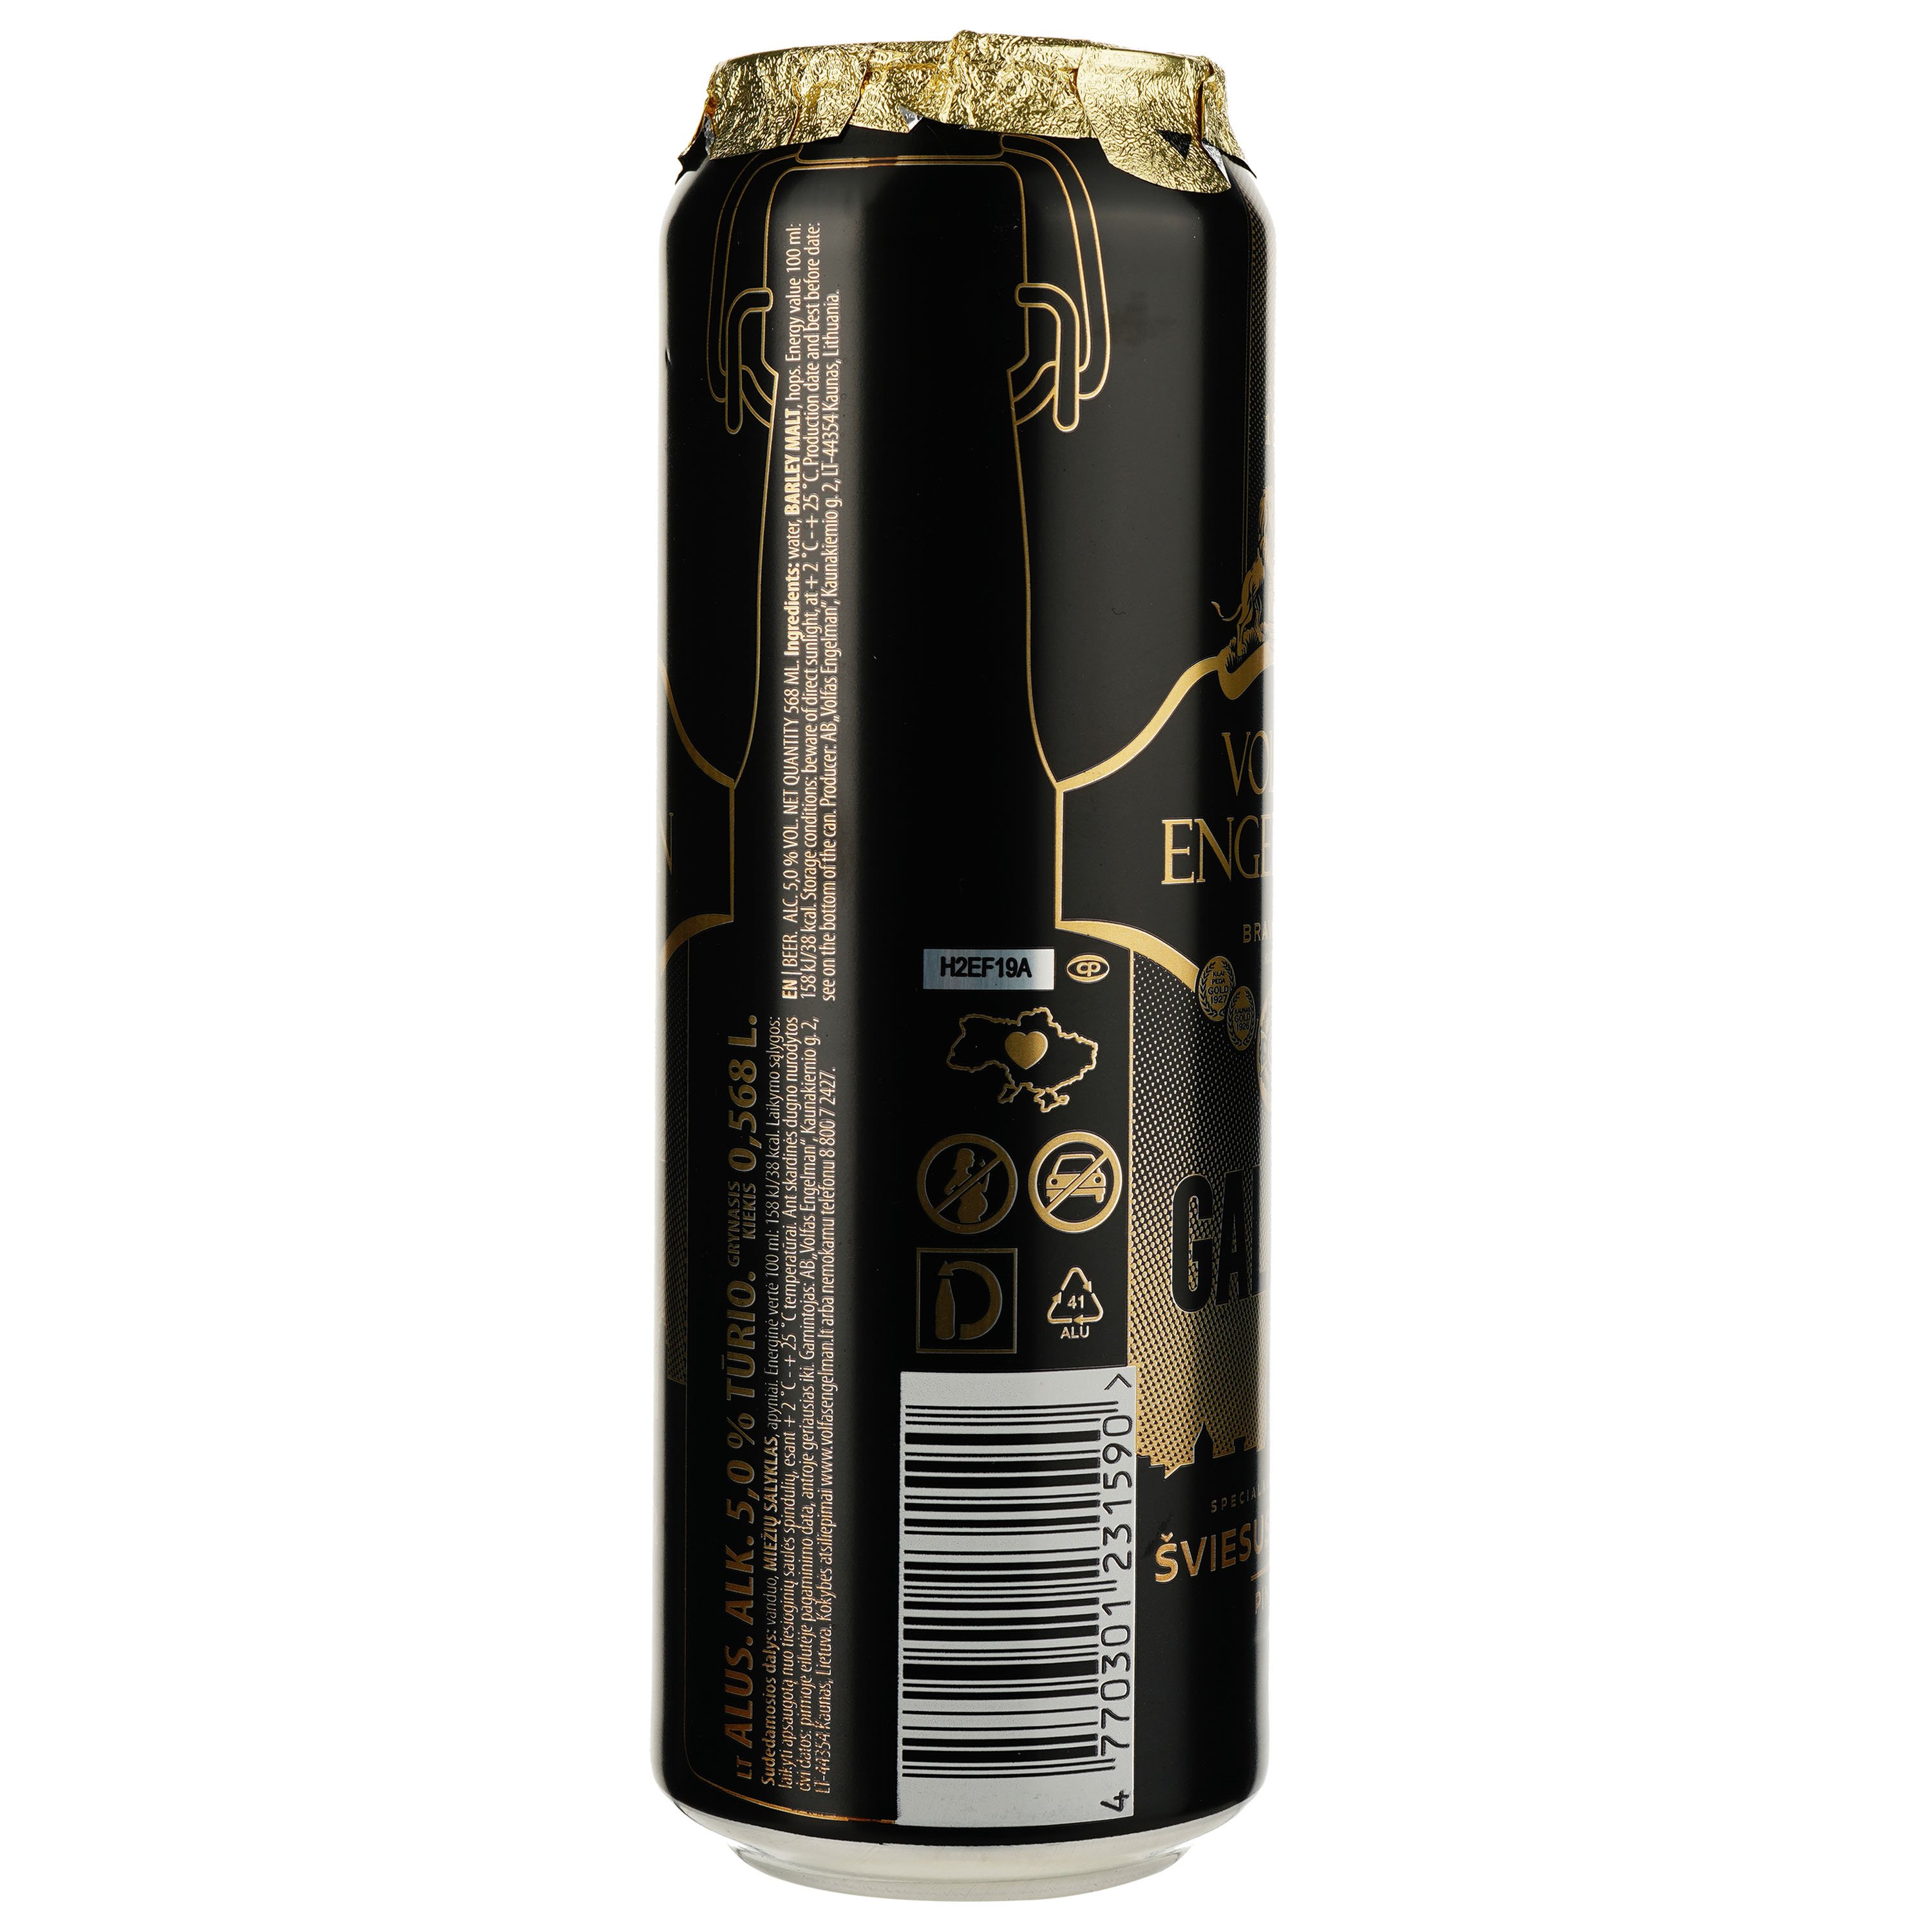 Пиво Volfas Engelman Galaxy Lager светлое 5% 0.568 л ж/б - фото 2